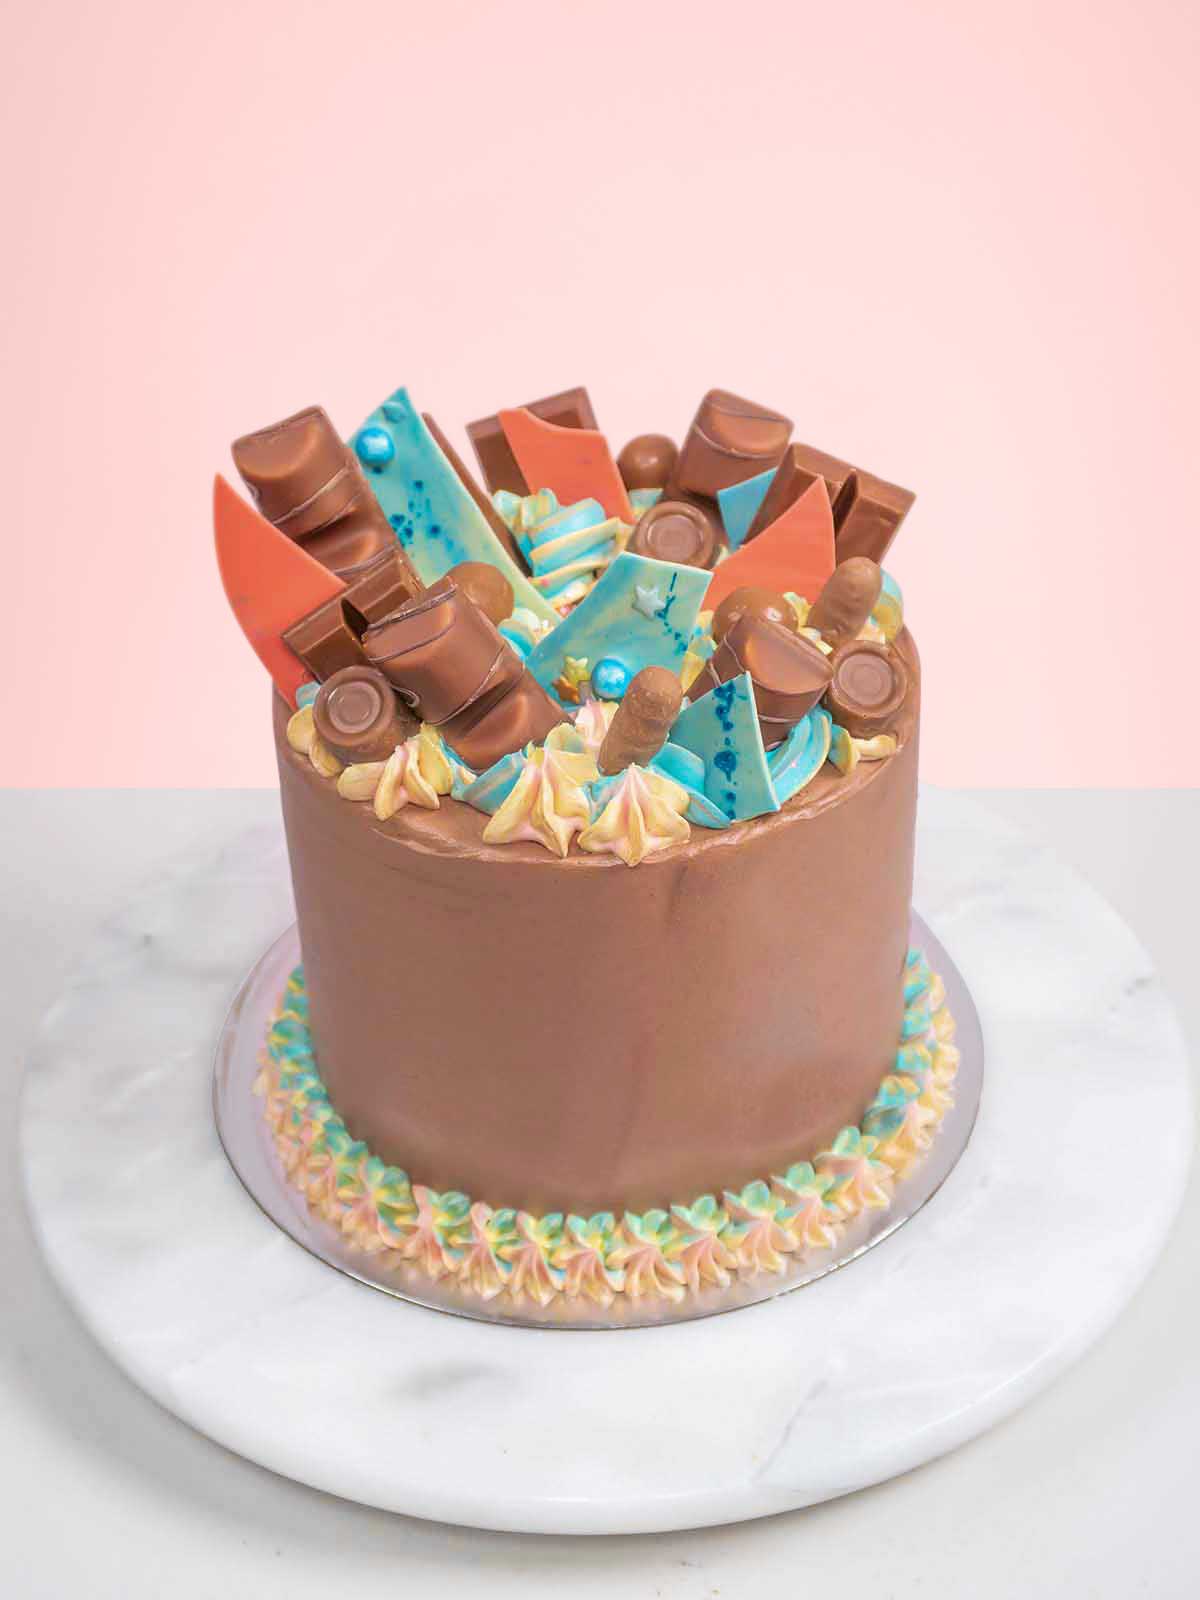 Chocolate Rainbow Cake to Buy